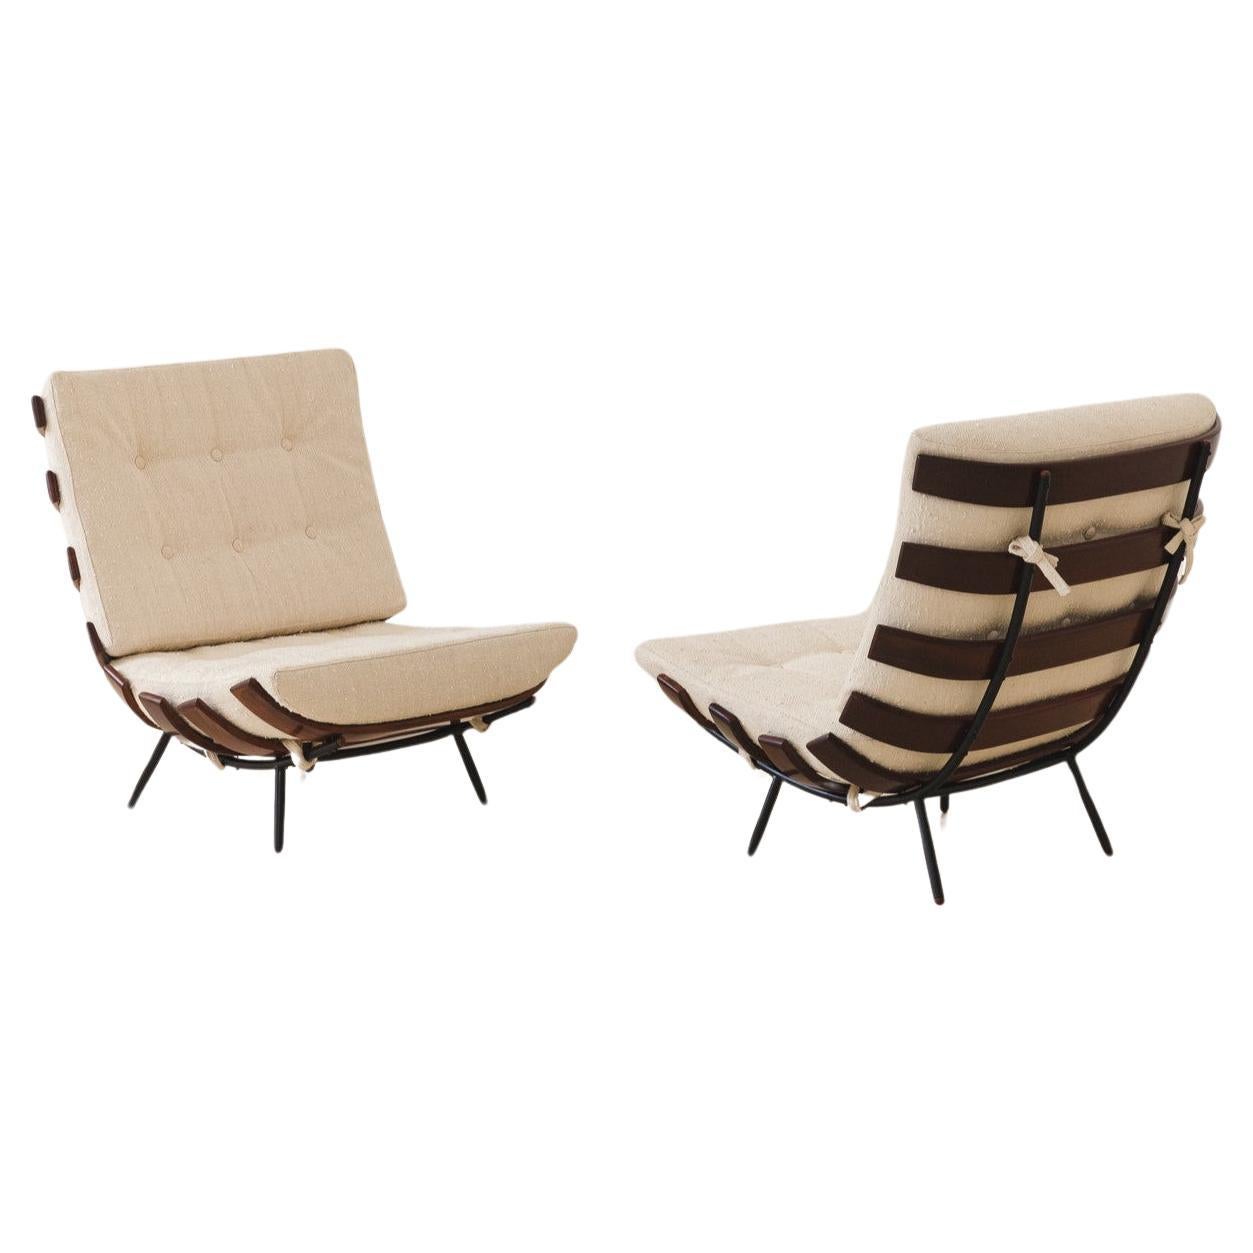 Martin Eisler and Carlo Hauner "Costela" Lounge Chair, Brazil, 1953